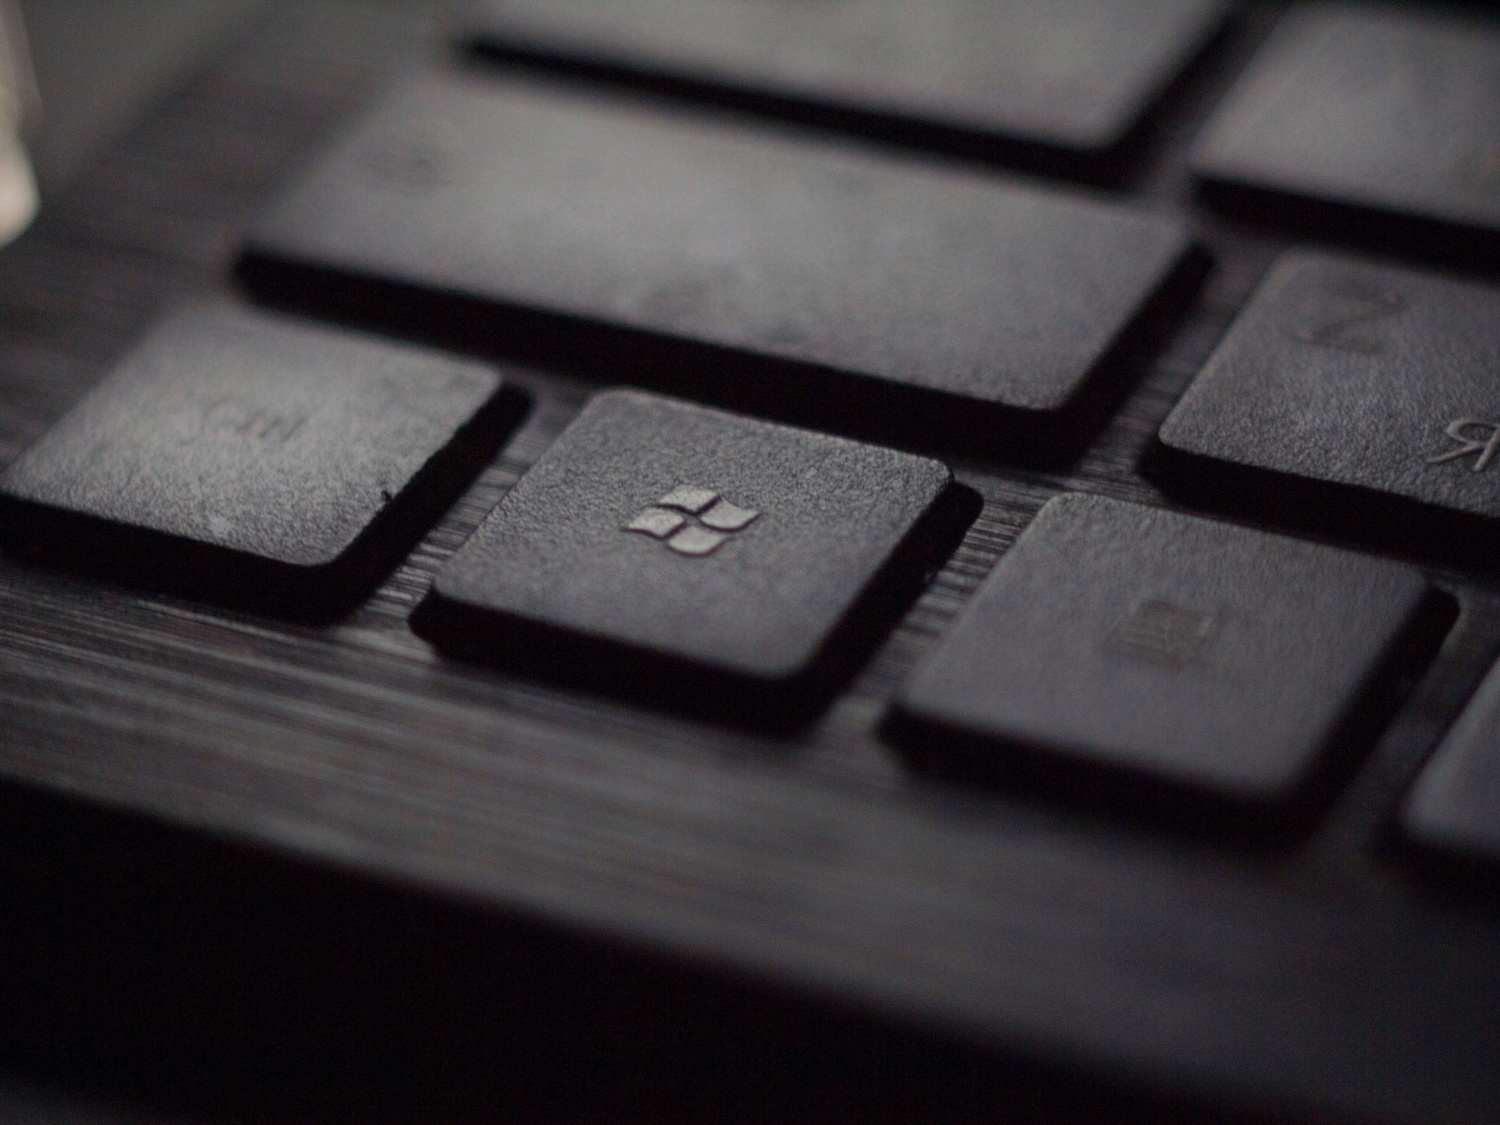 Microsoft Warns of Phishing Campaign | Redirect Links to Malicious URLs